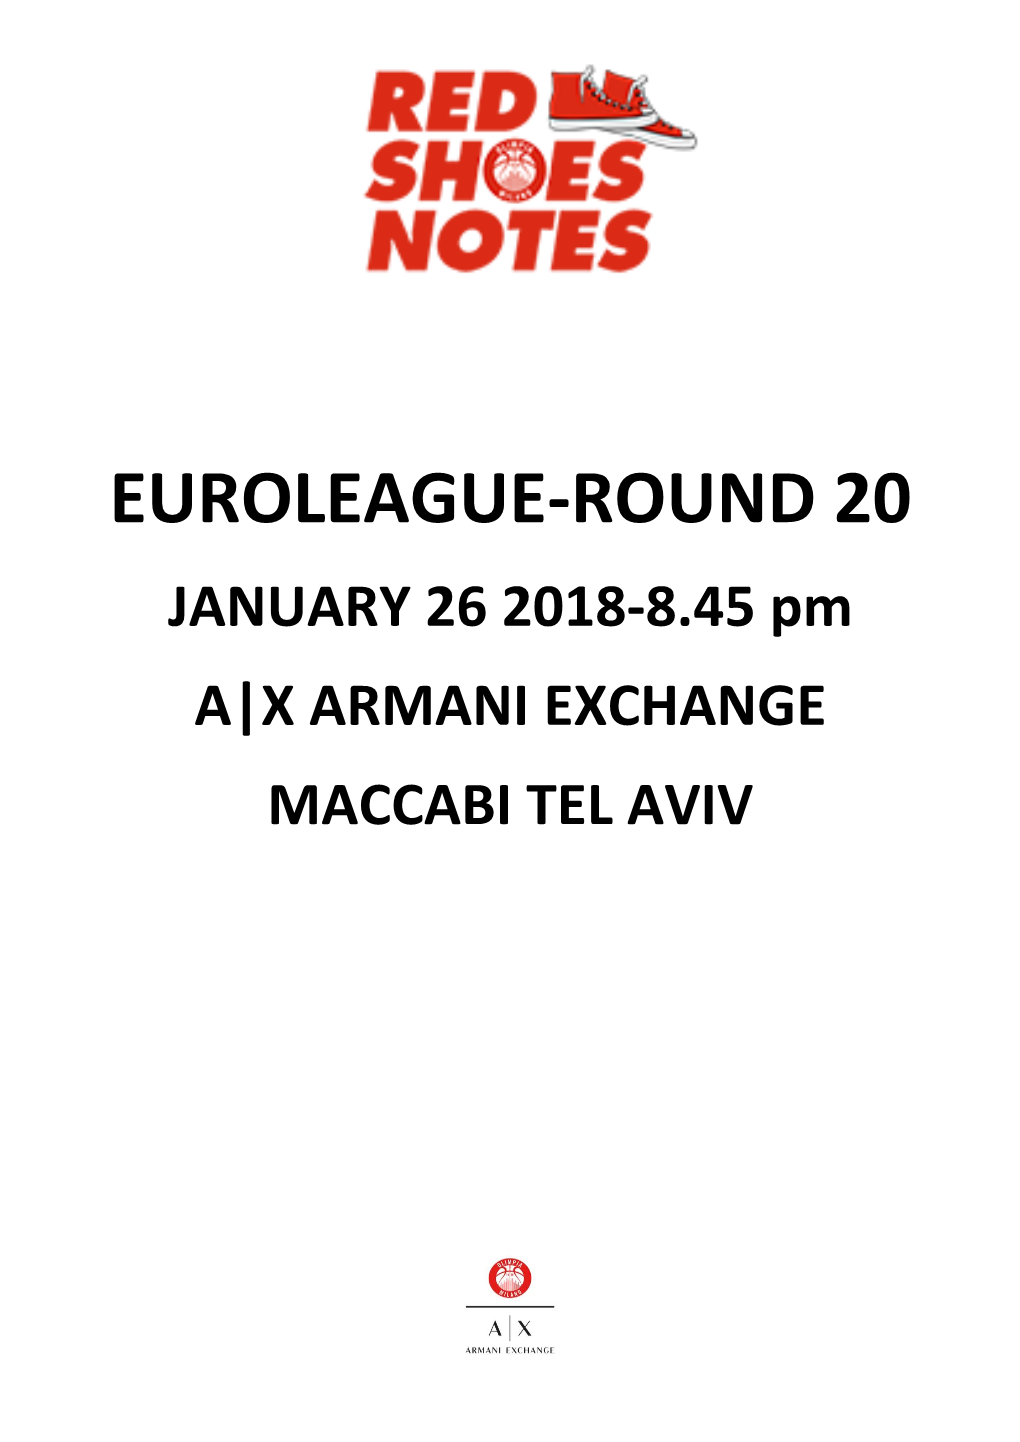 Milano-Maccabi Game Notes